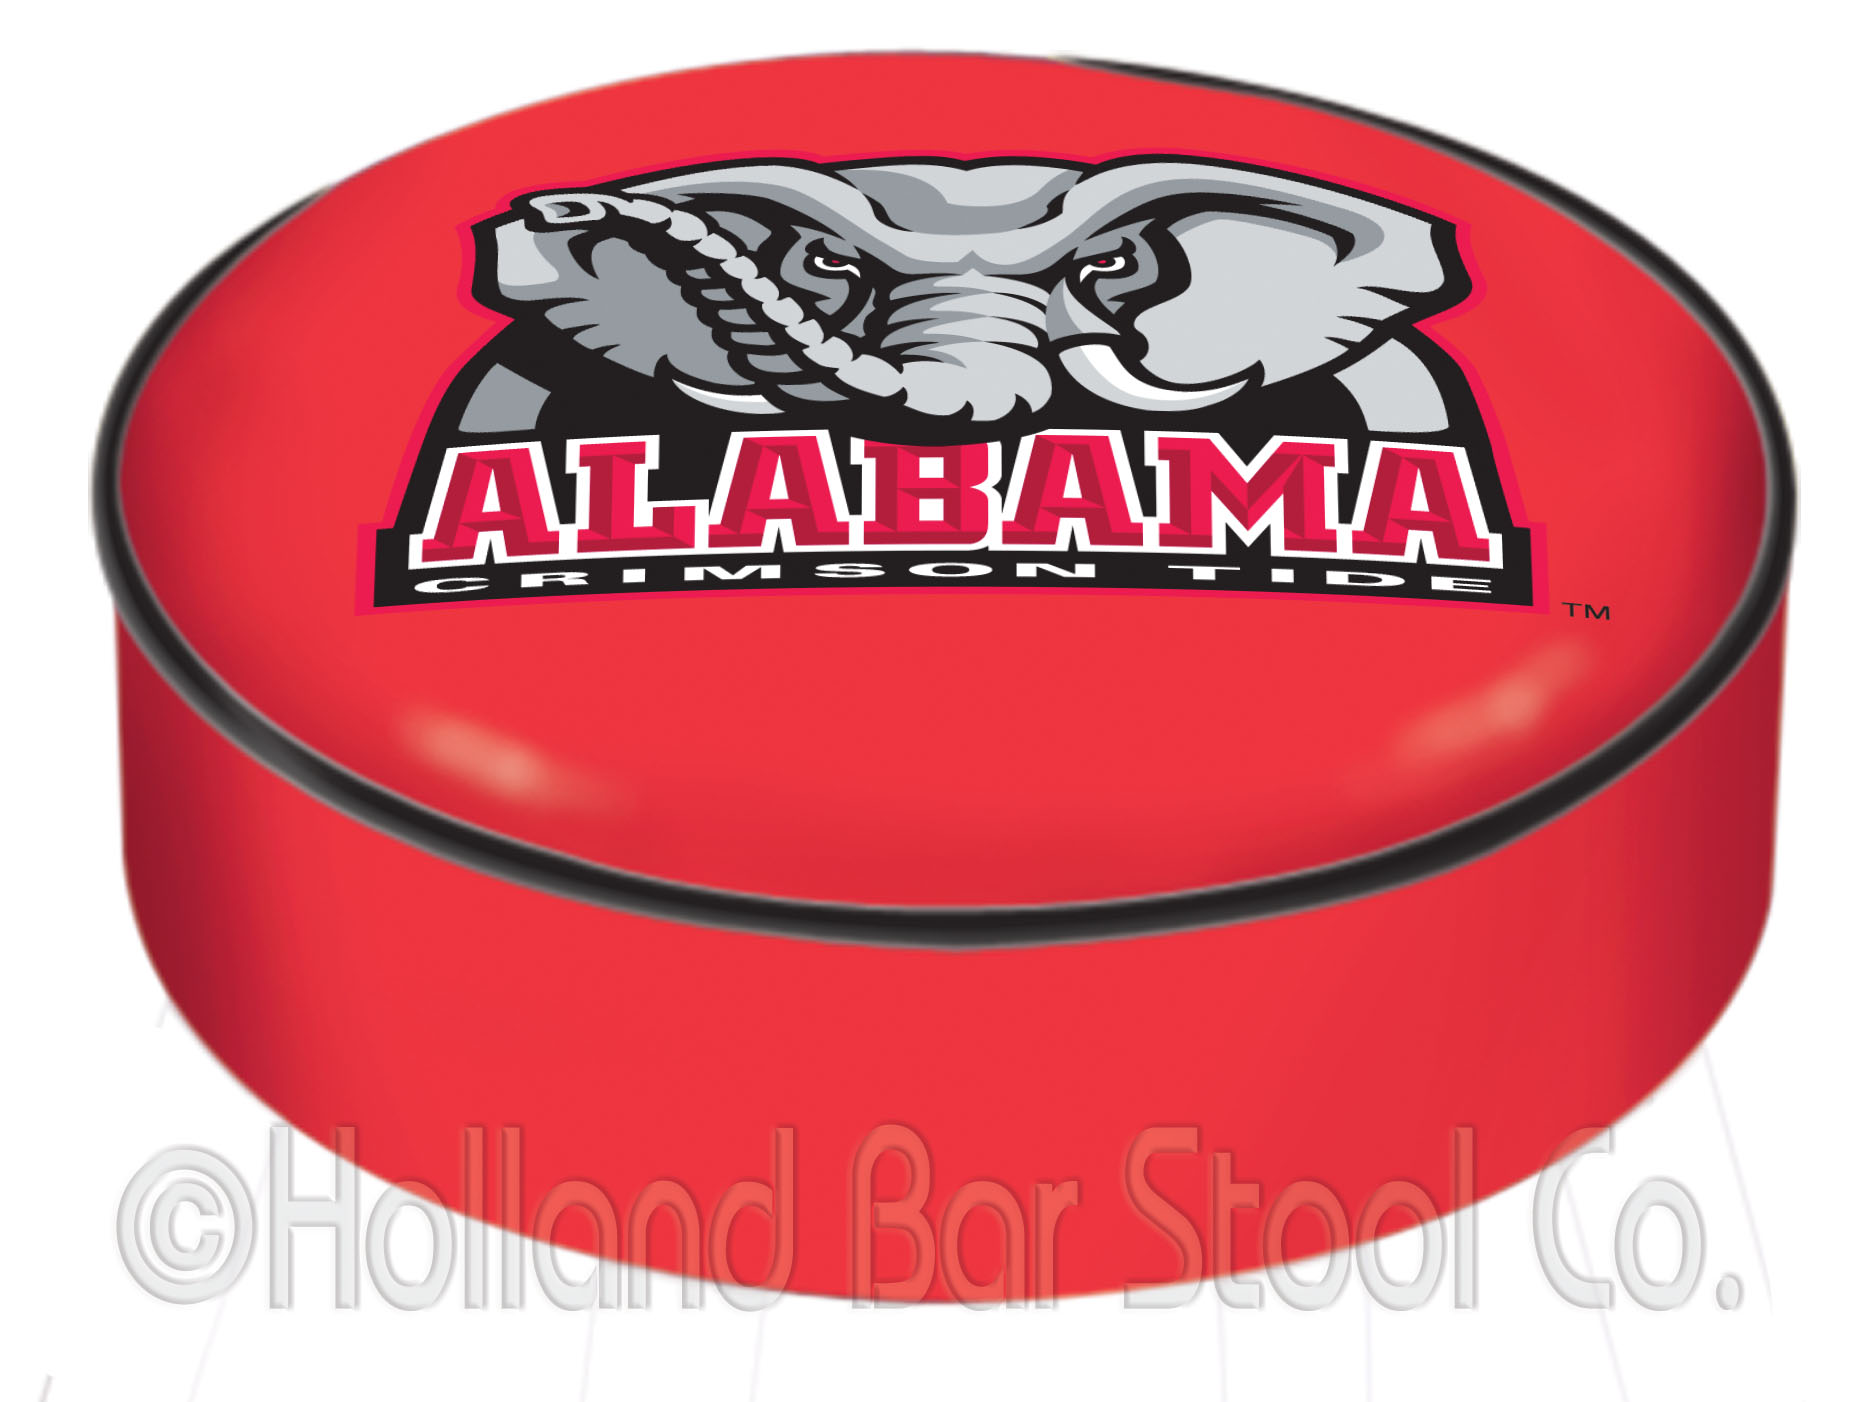 Holland Bar Stool BSCAL-Ele Alabama Bar Stool Seat Cover With Elephant Logo